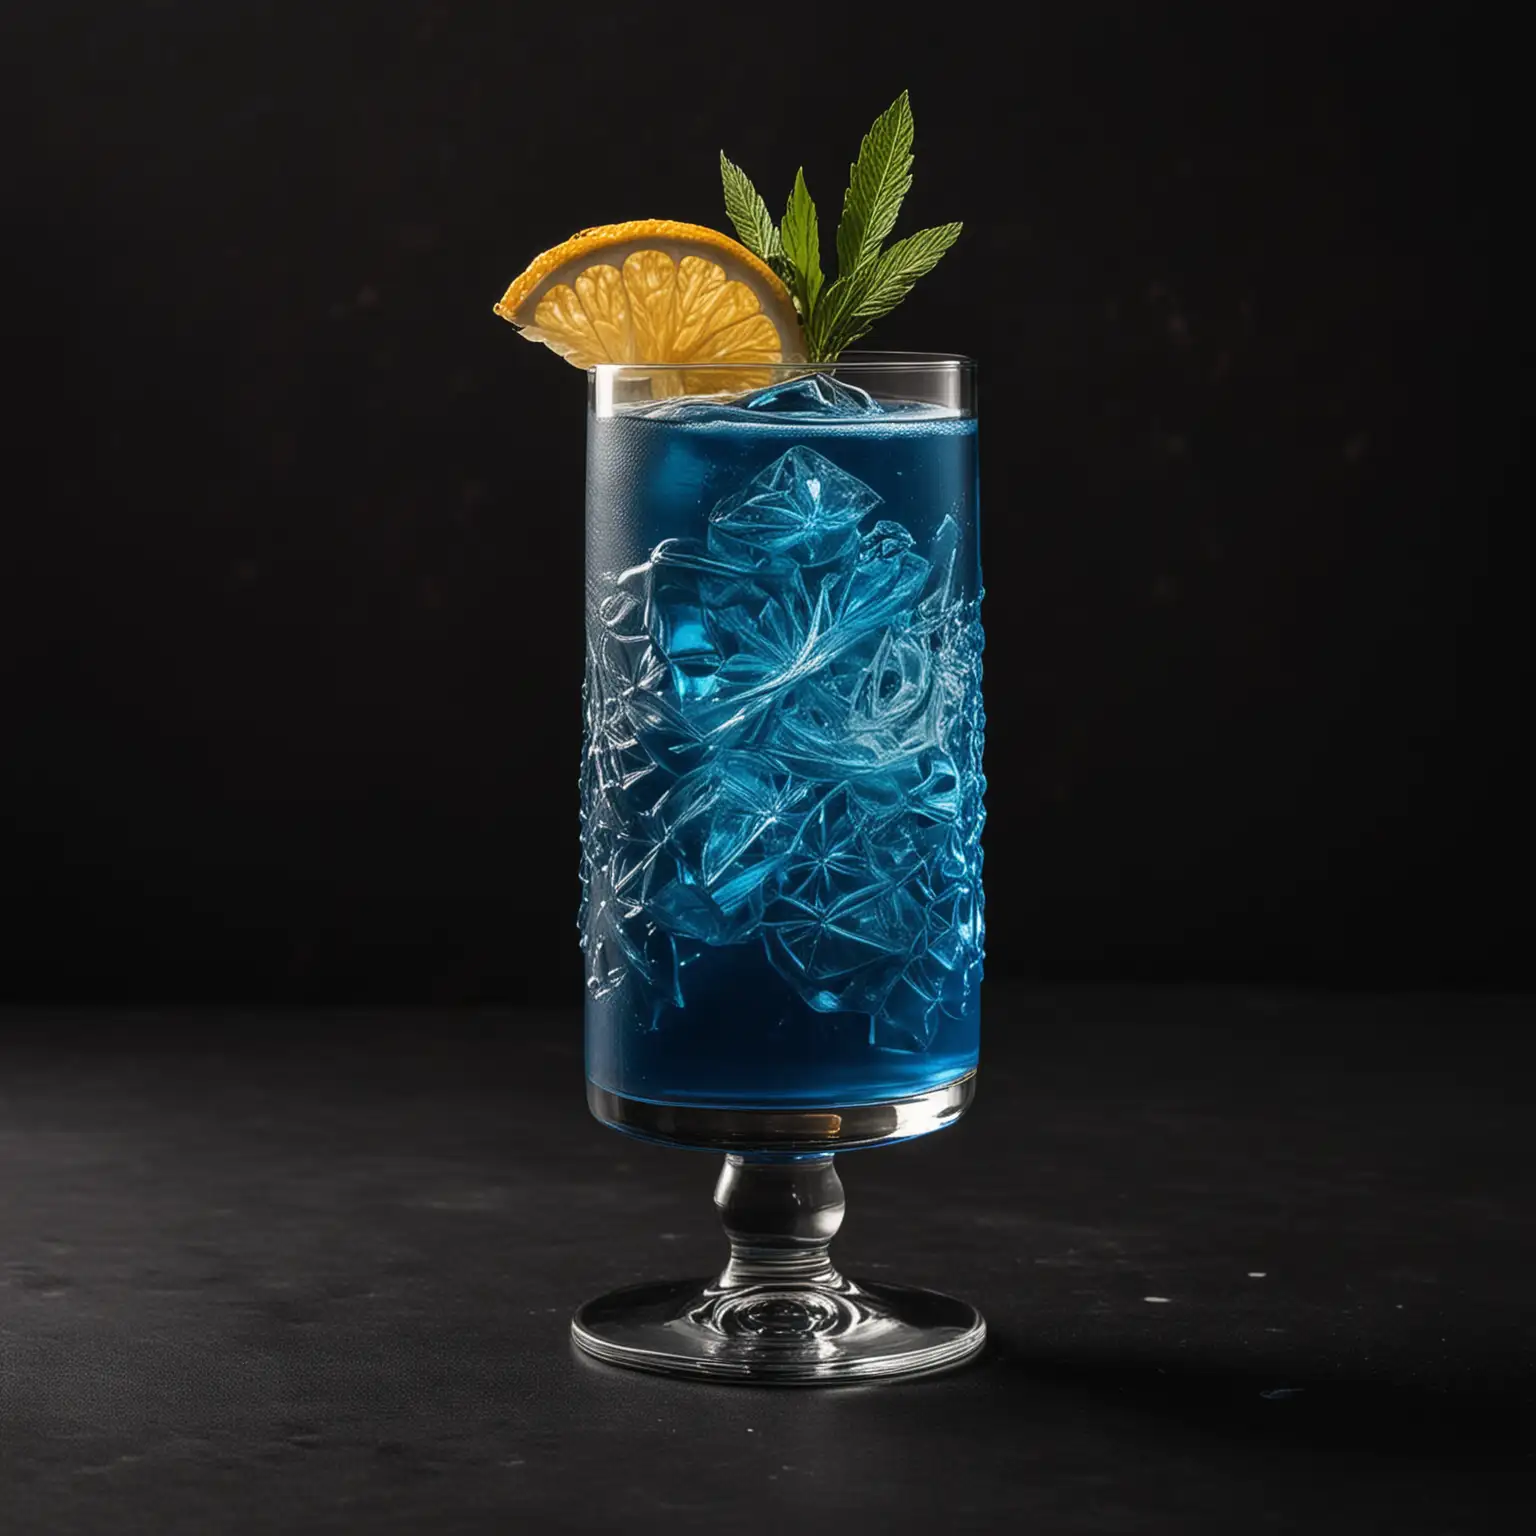 Exquisite Blue Cocktail with Garnish on Elegant Black Background